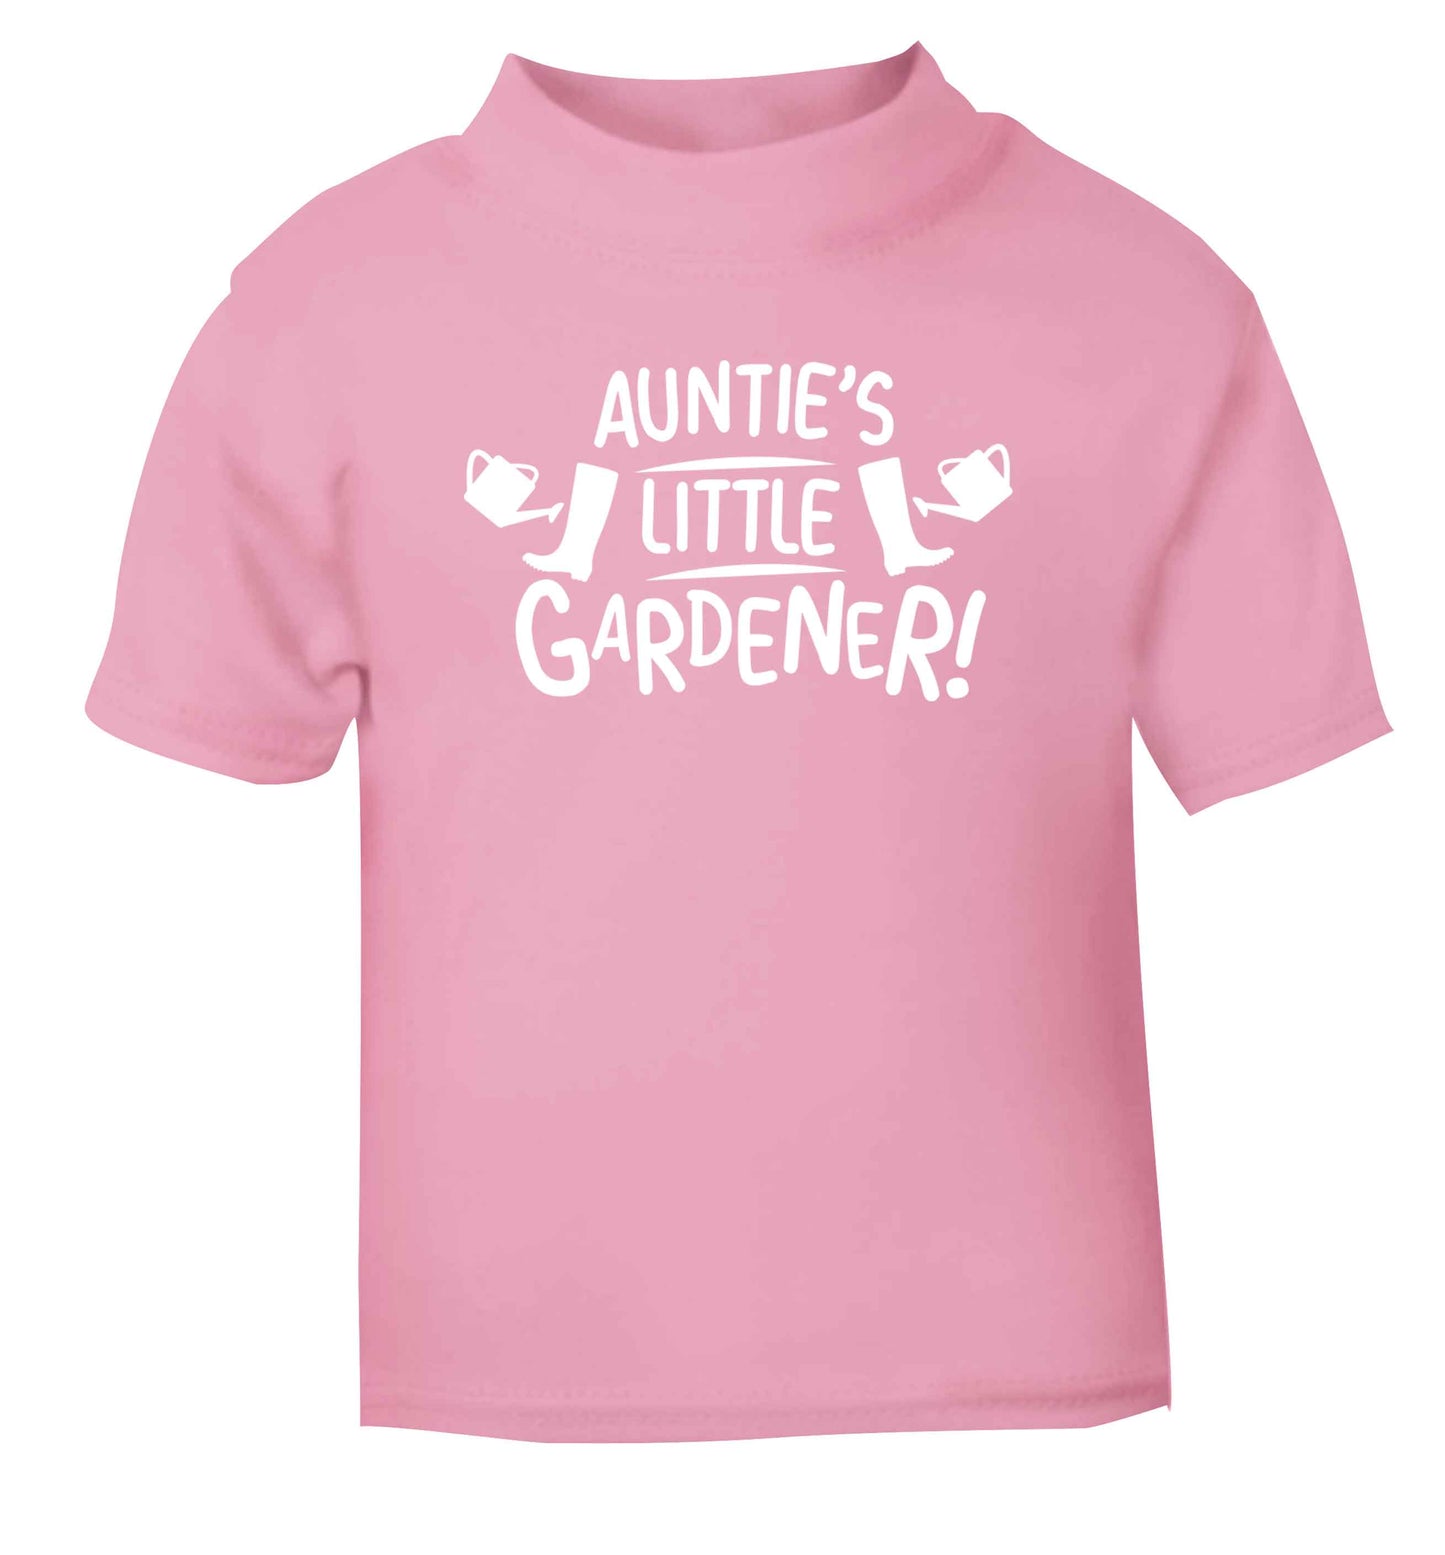 Auntie's little gardener light pink Baby Toddler Tshirt 2 Years